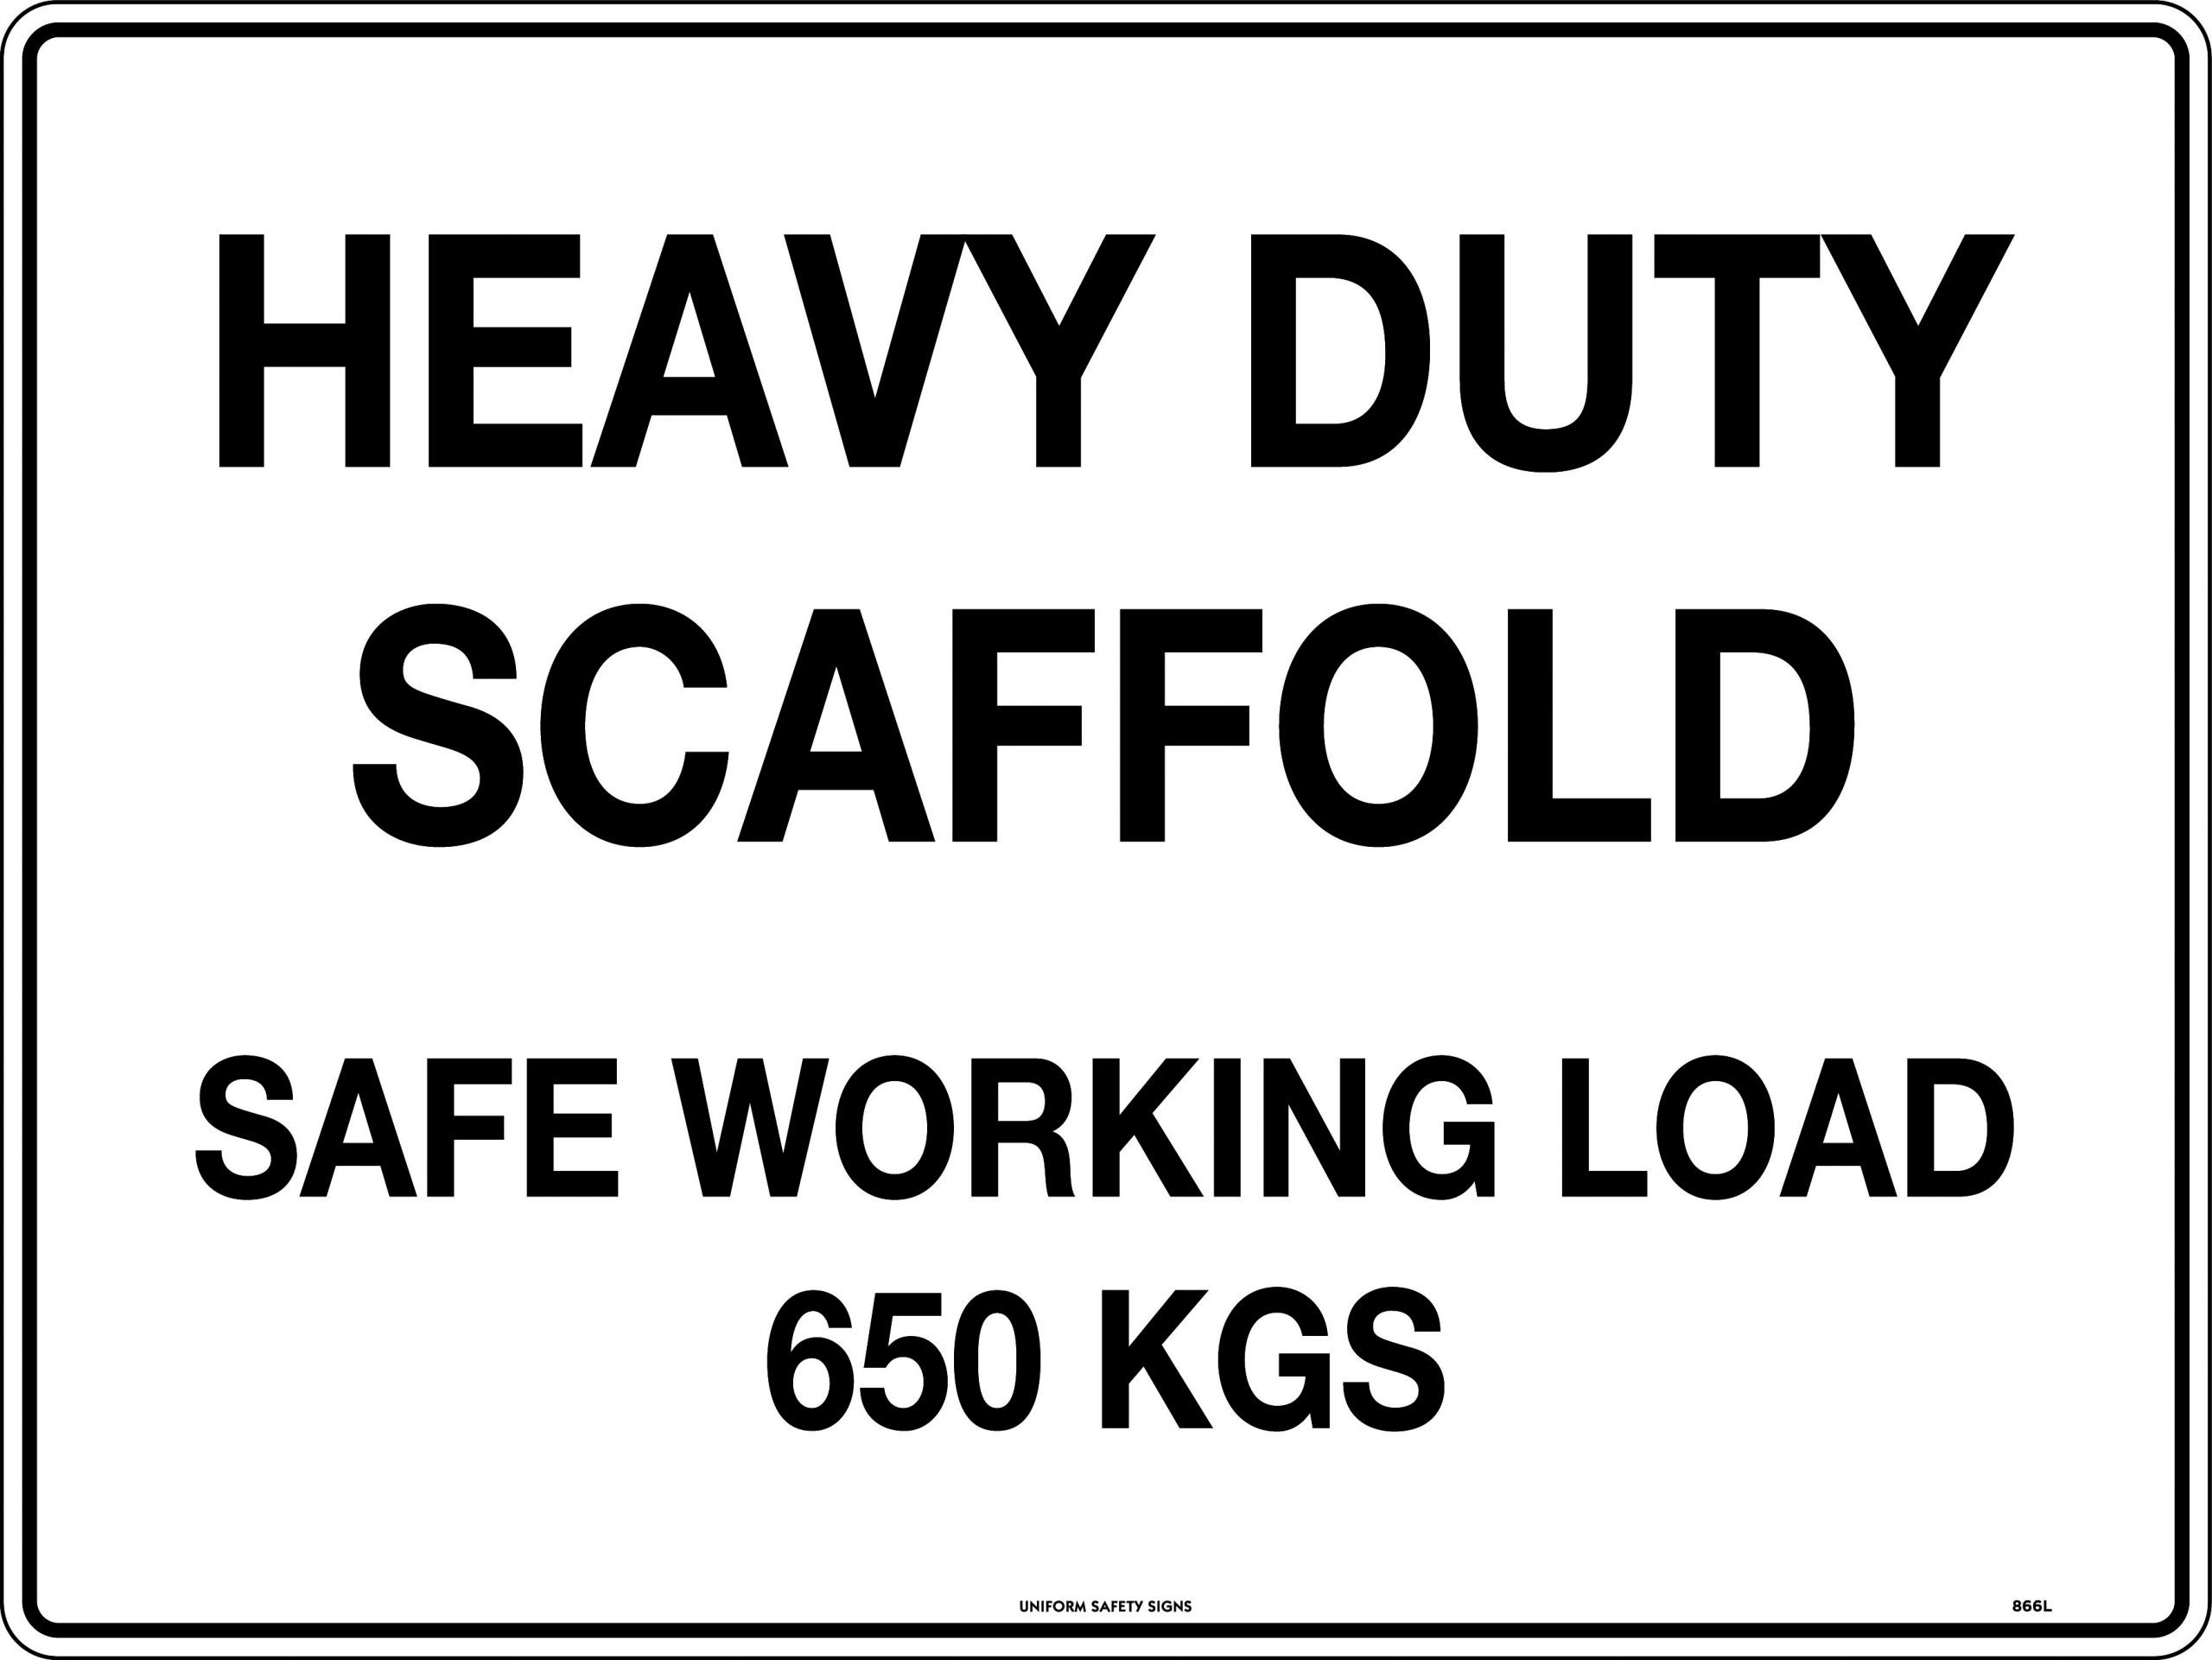 UNIFORM SAFETY 600X450MM POLY HEAVY DUTY SCAFFOLD SAFE WORKING LOAD 65